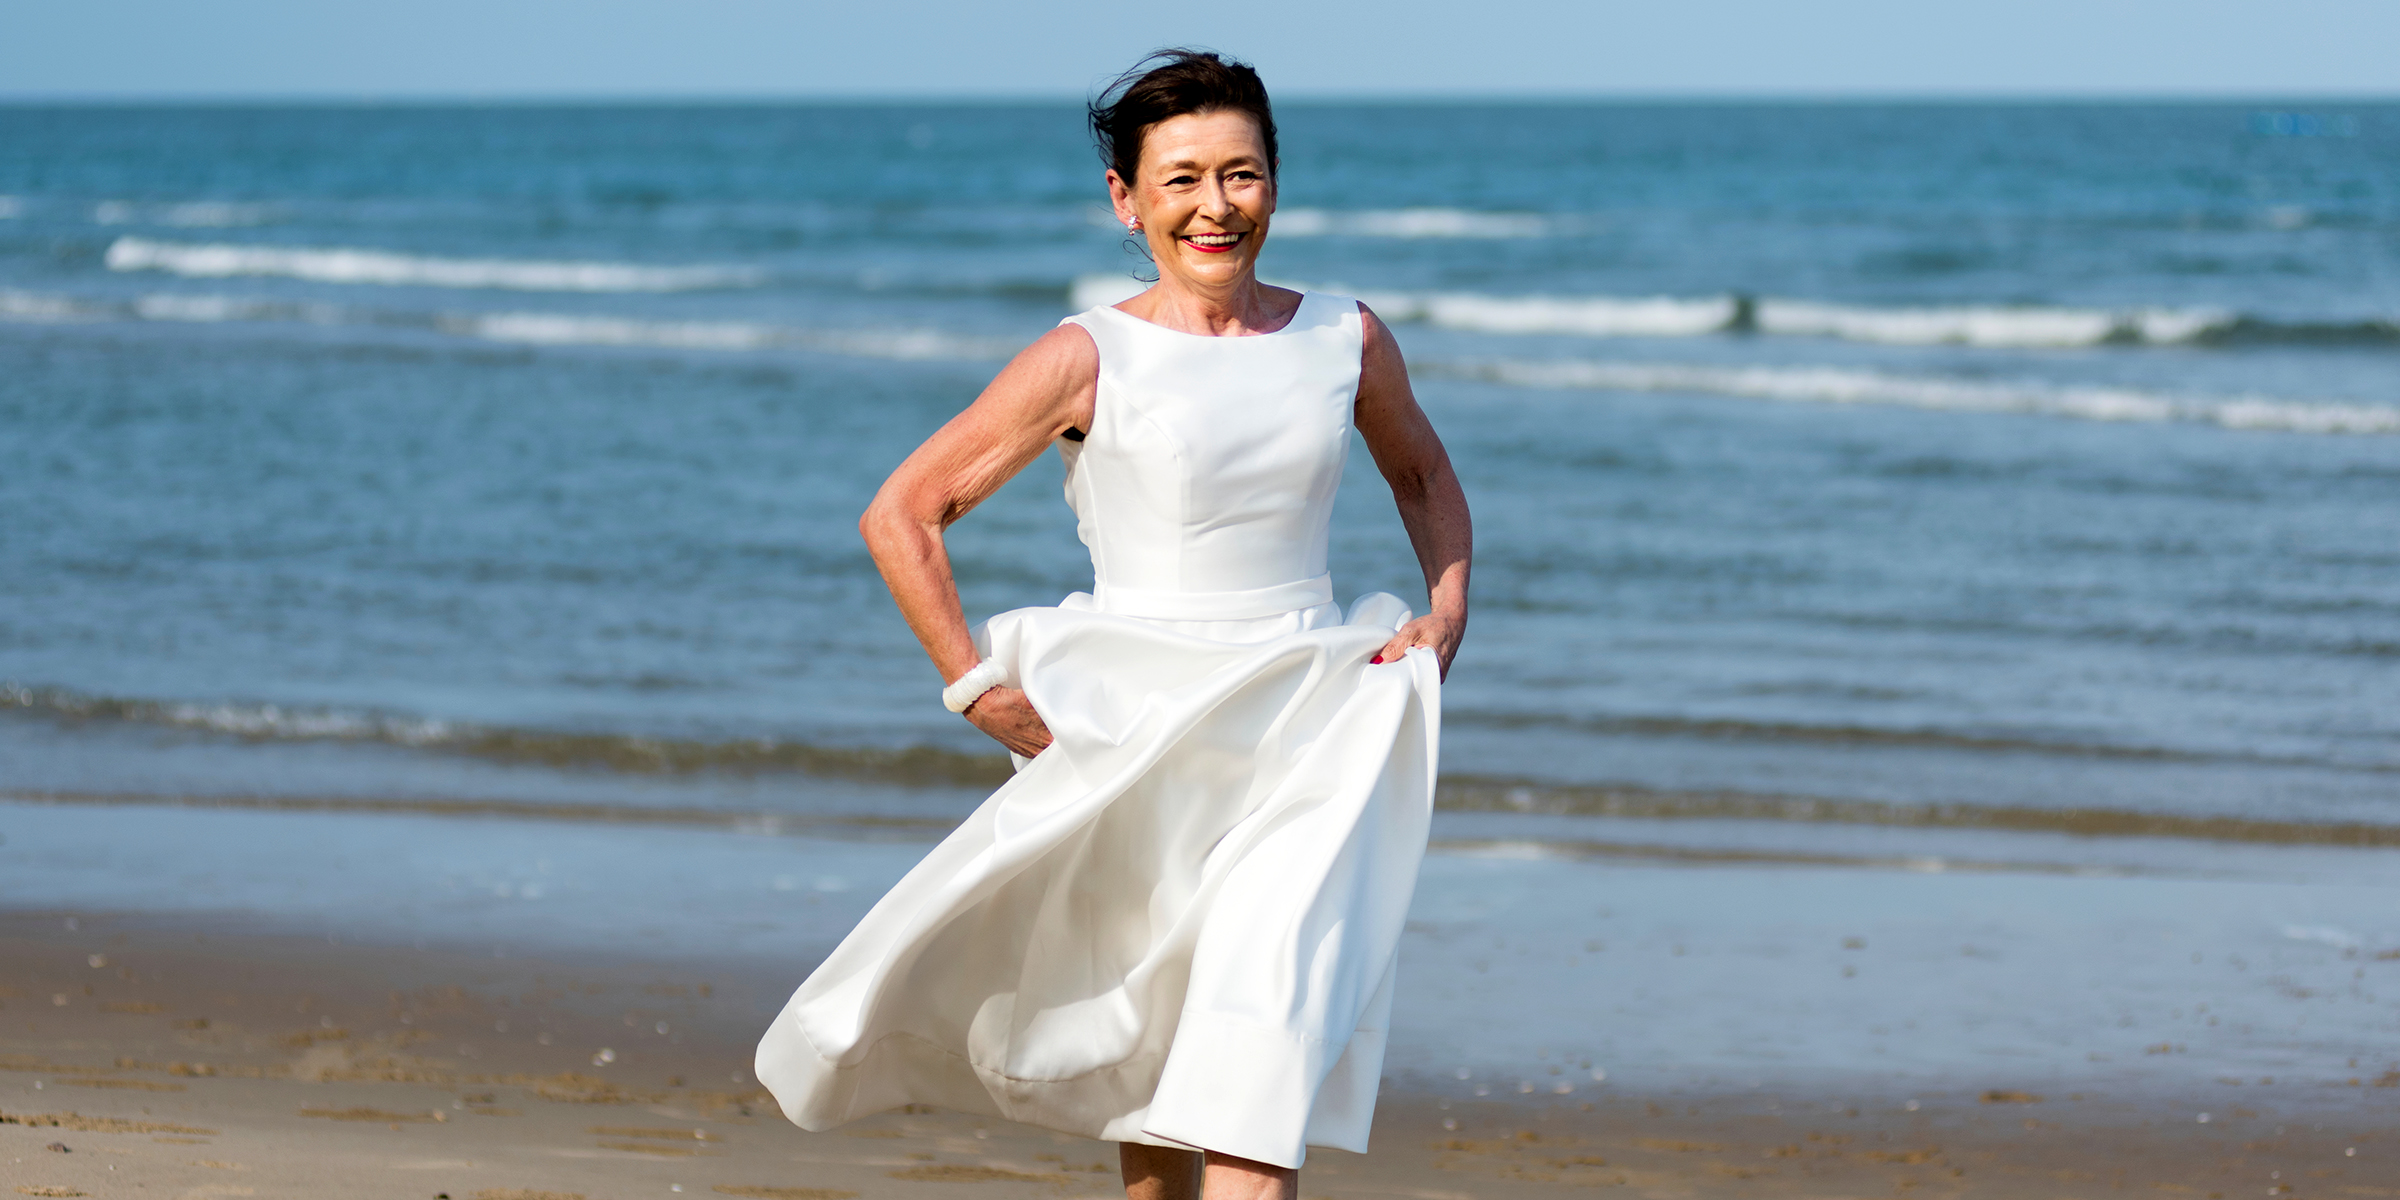 Woman runs in a white dress | Source: Shutterstock